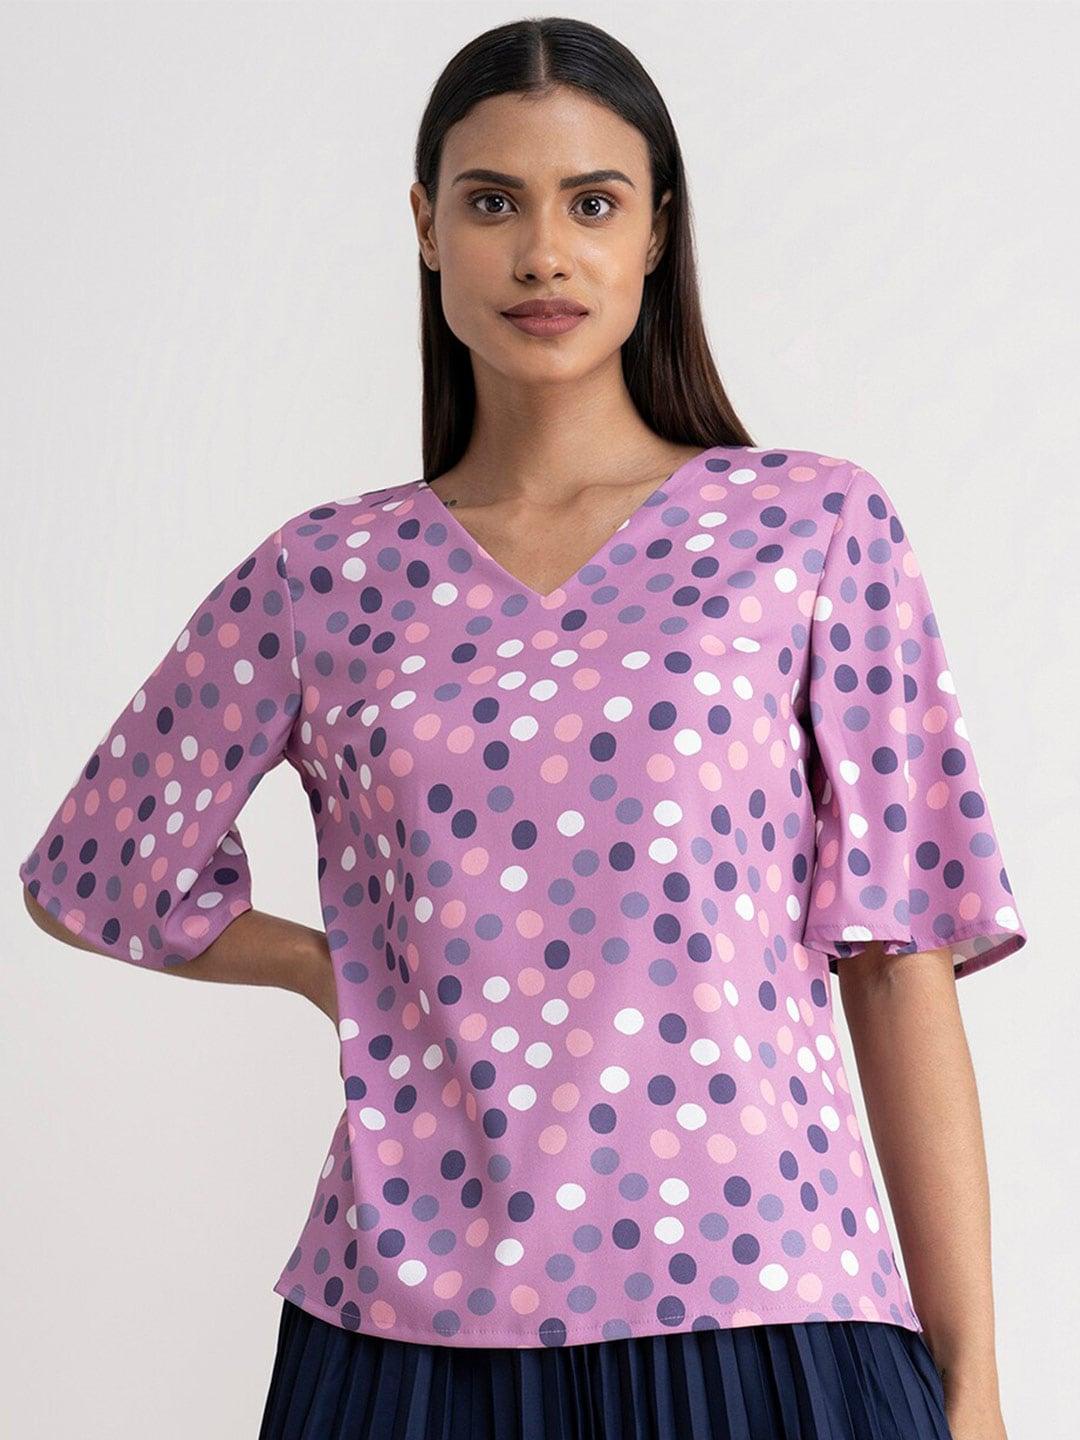 fablestreet-women-purple-polka-dot-printed-bell-sleeve-top